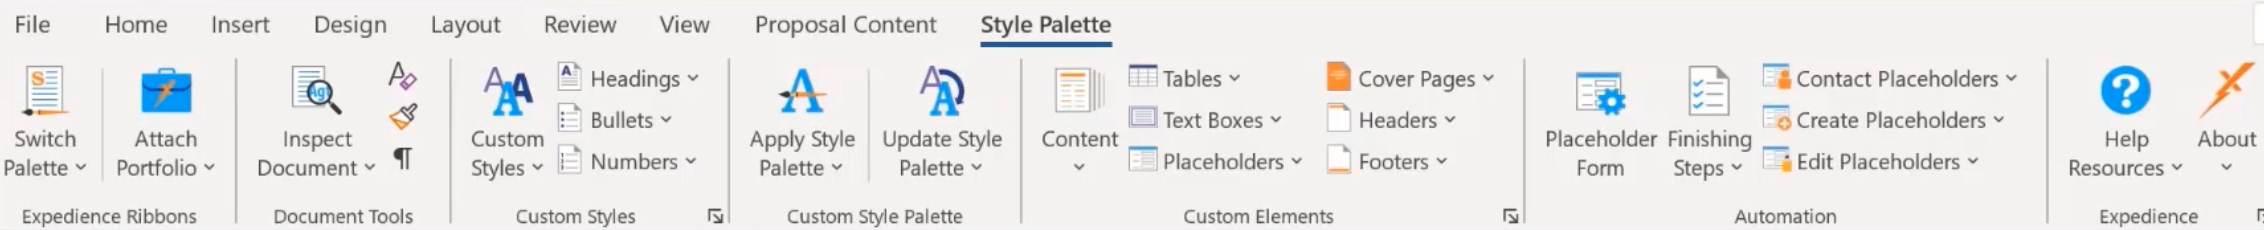 Proposal Formatting Tools in Microsoft Word